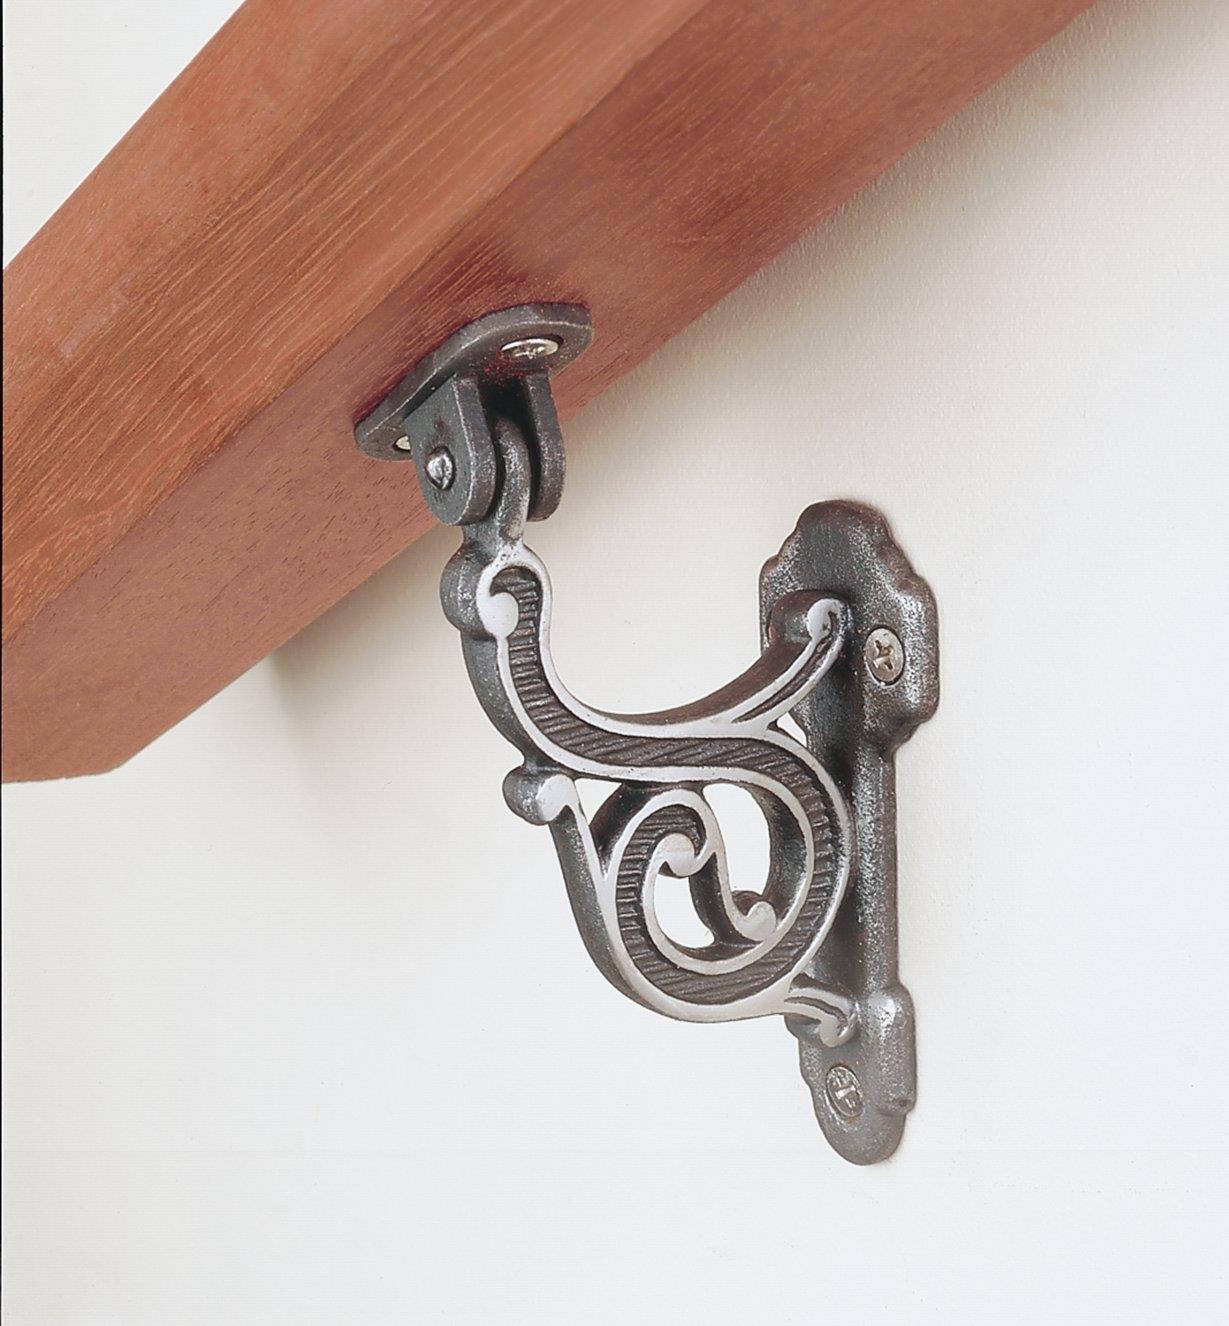 Scroll Handrail Bracket mounted to a handrail